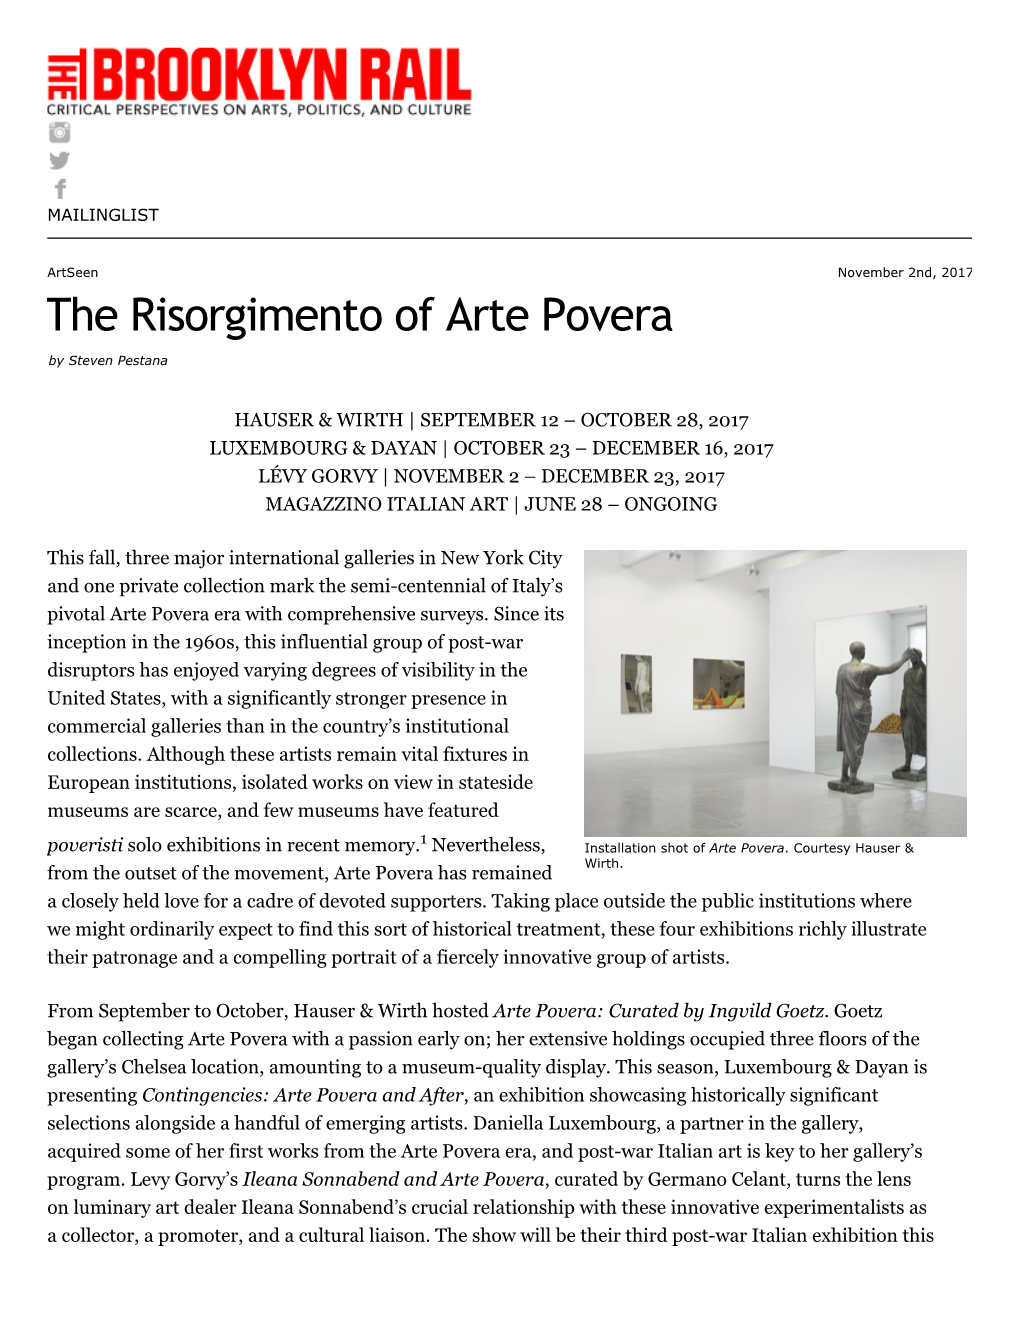 The Risorgimento of Arte Povera by Steven Pestana